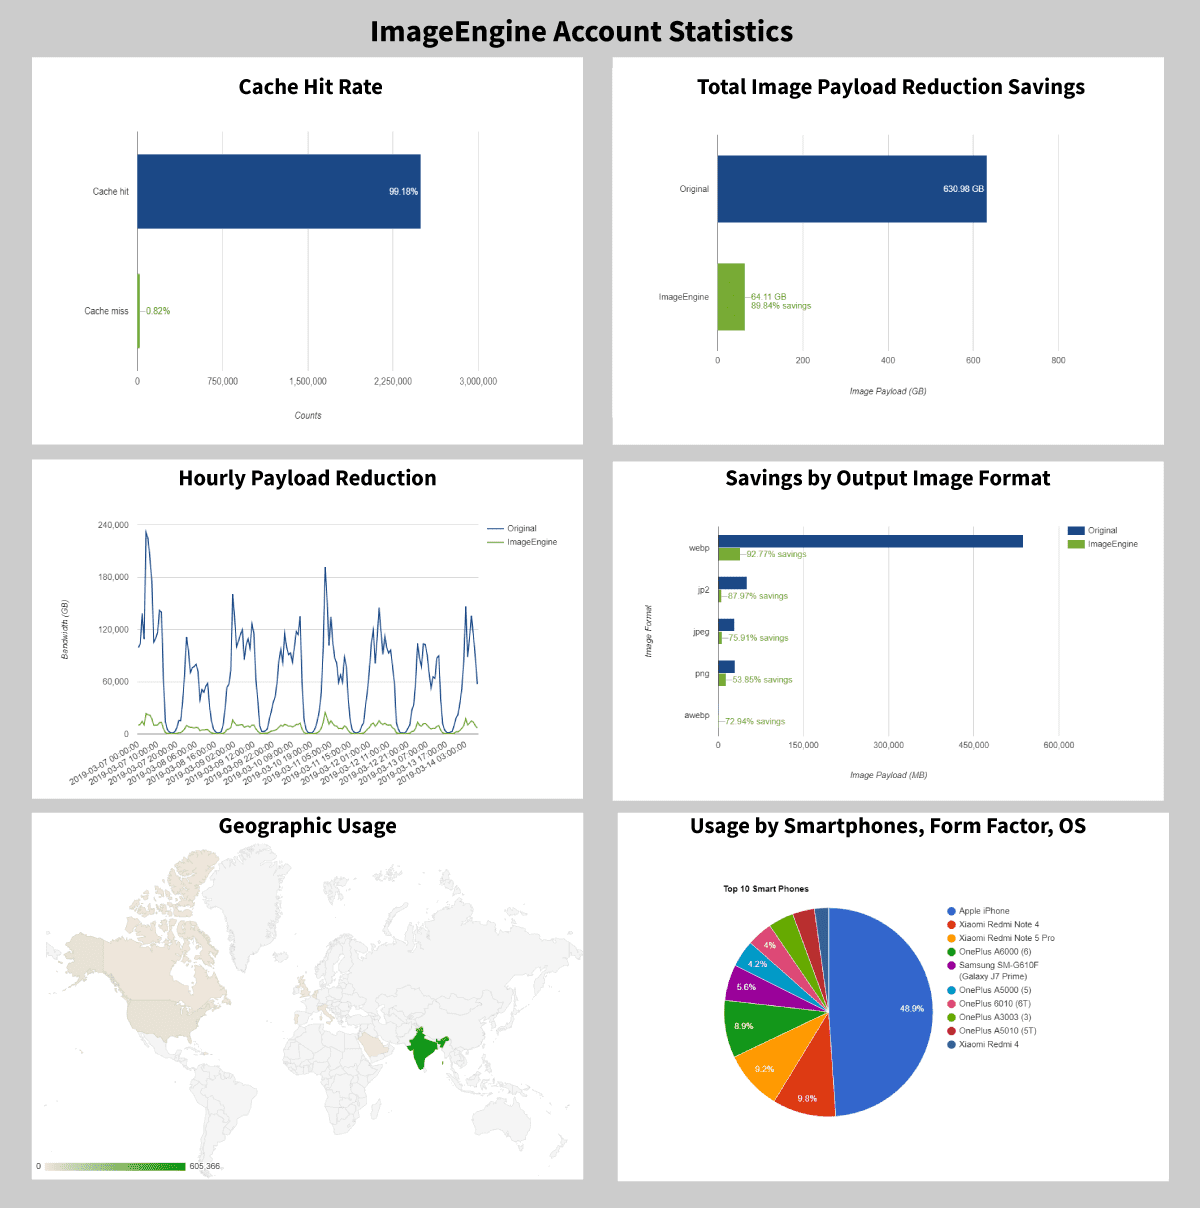 ImageEngine Account Statistics